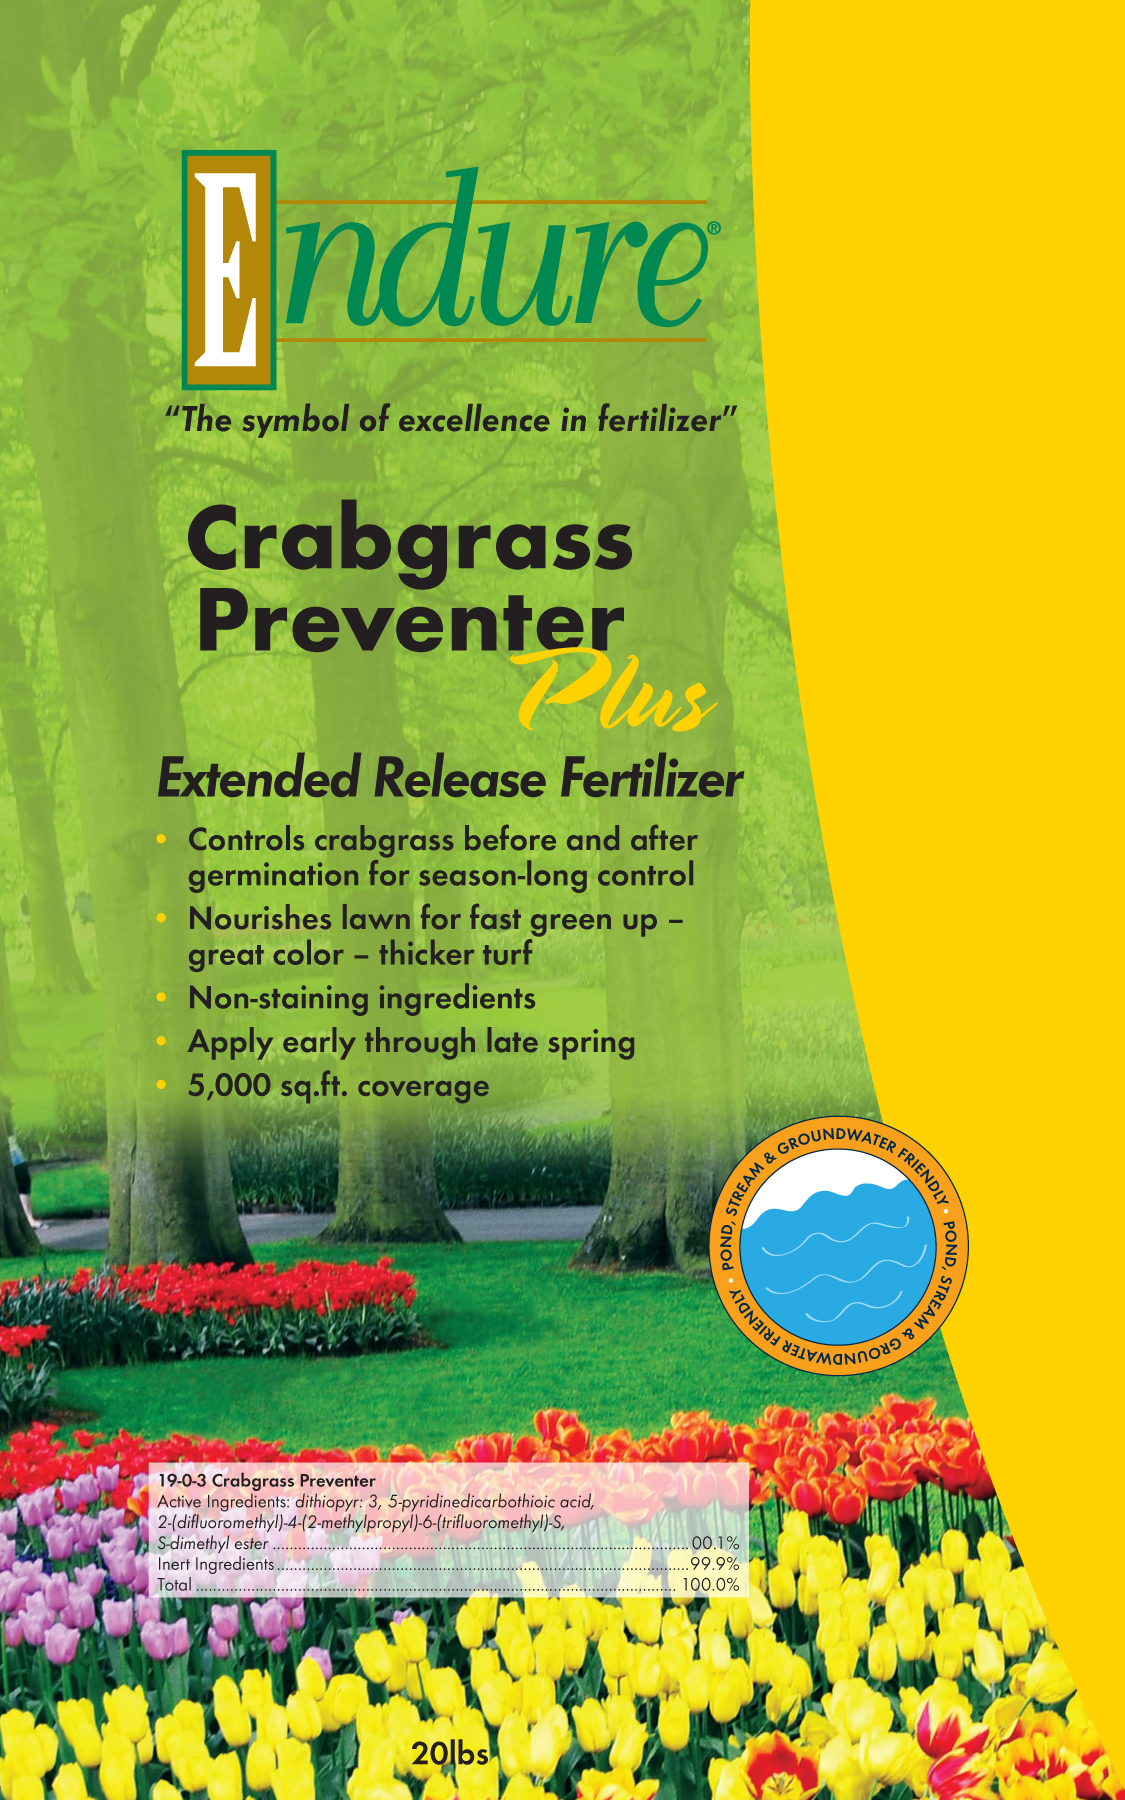 Shop Grass Seed and Fertilizer